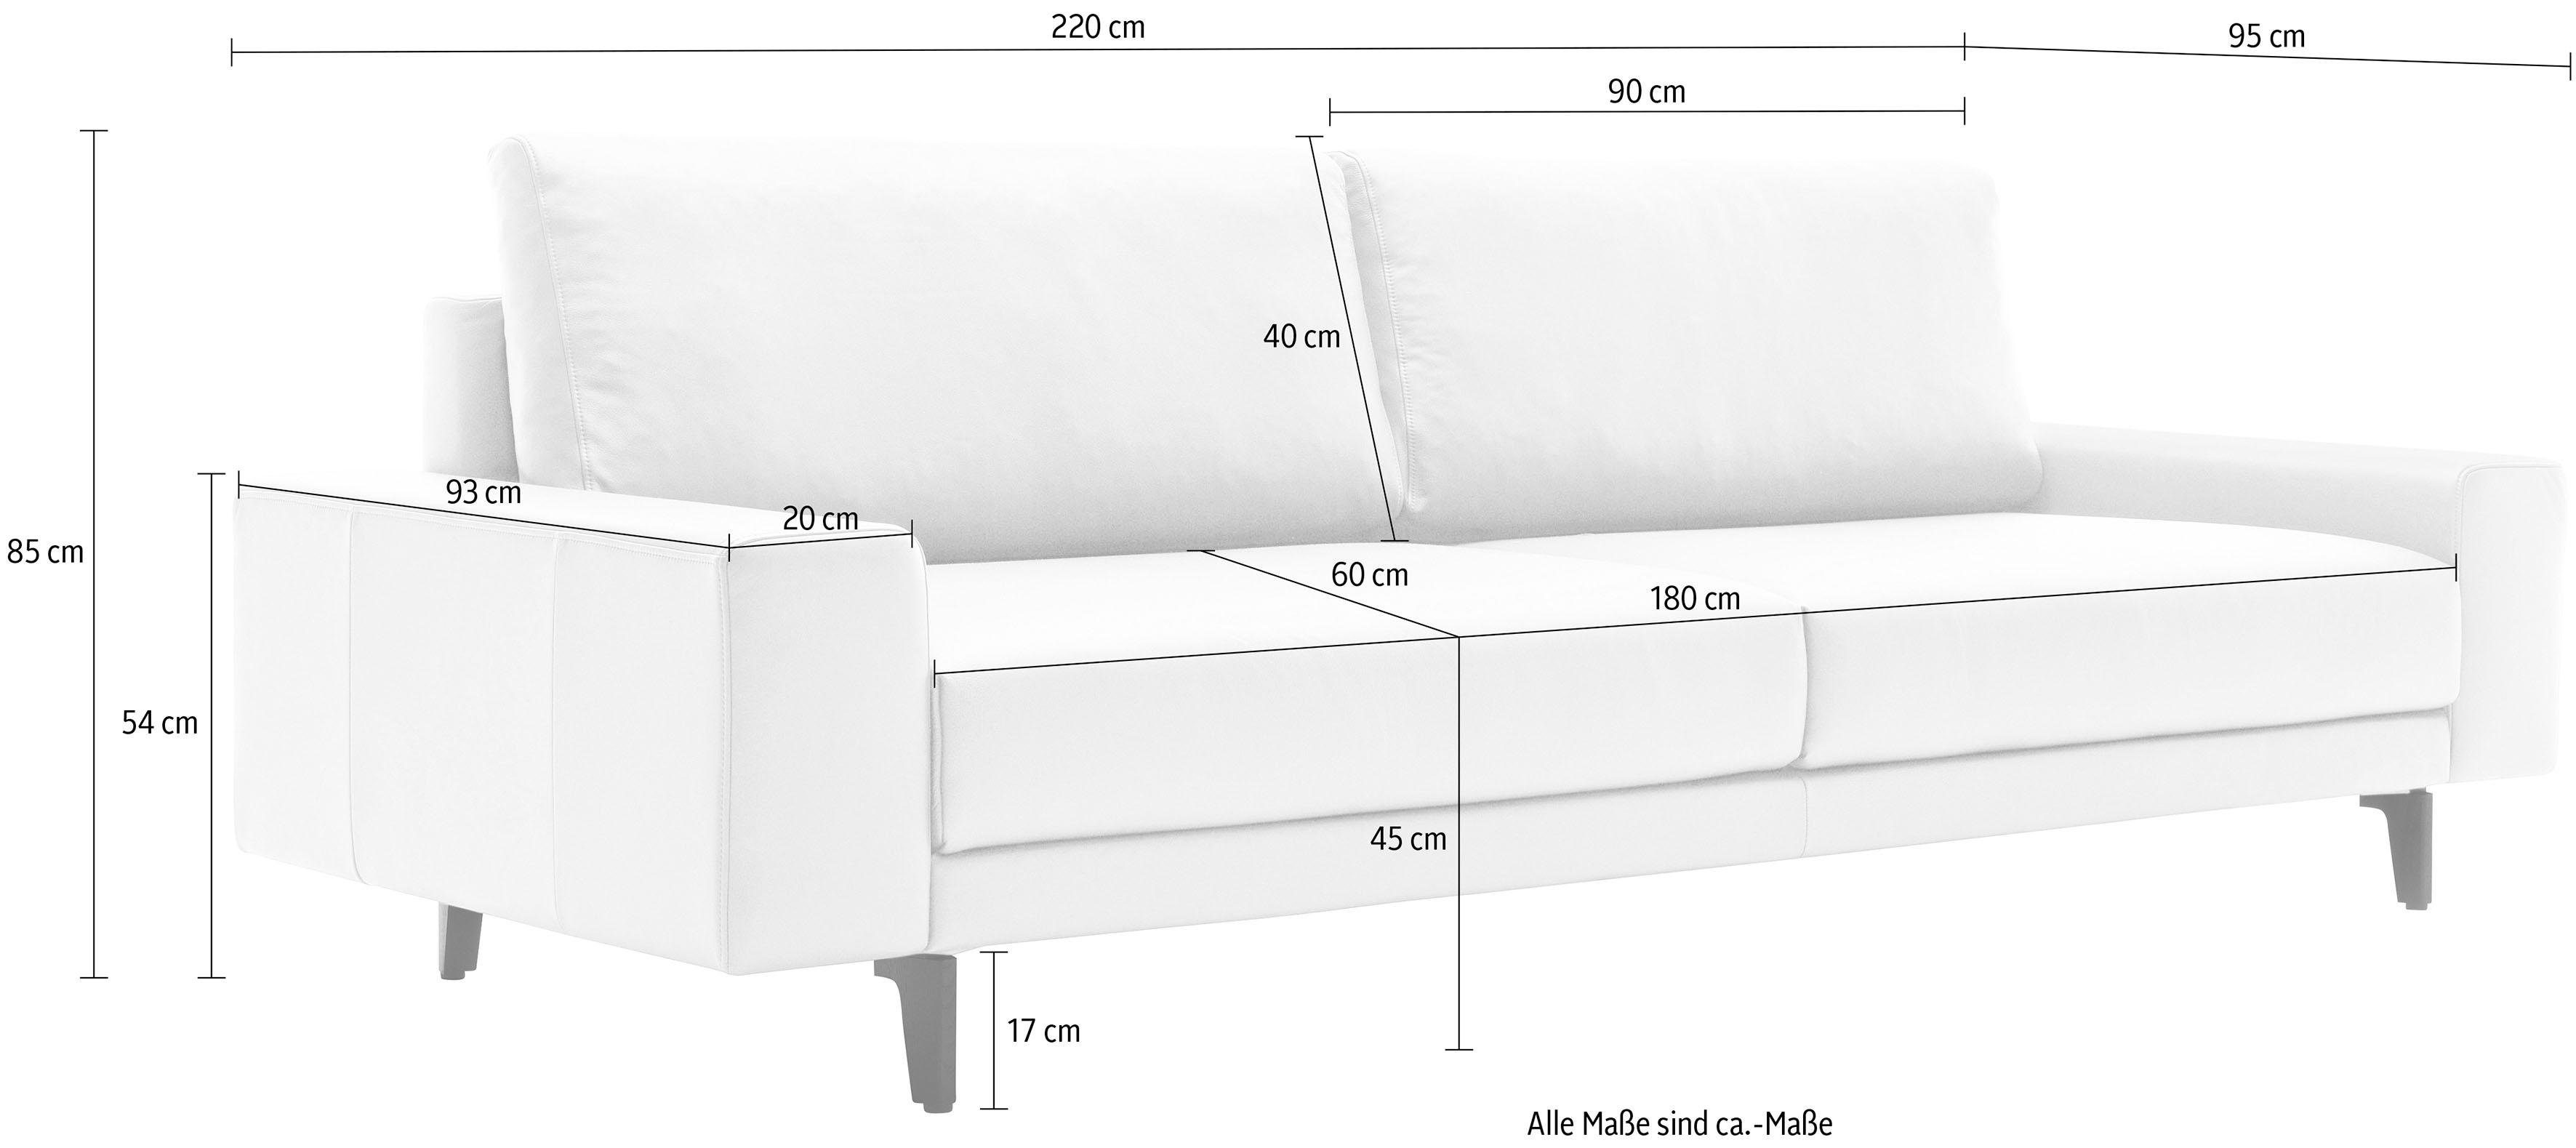 hülsta sofa 3-Sitzer hs.450, in cm breit Armlehne Alugussfüße 220 Breite umbragrau, niedrig